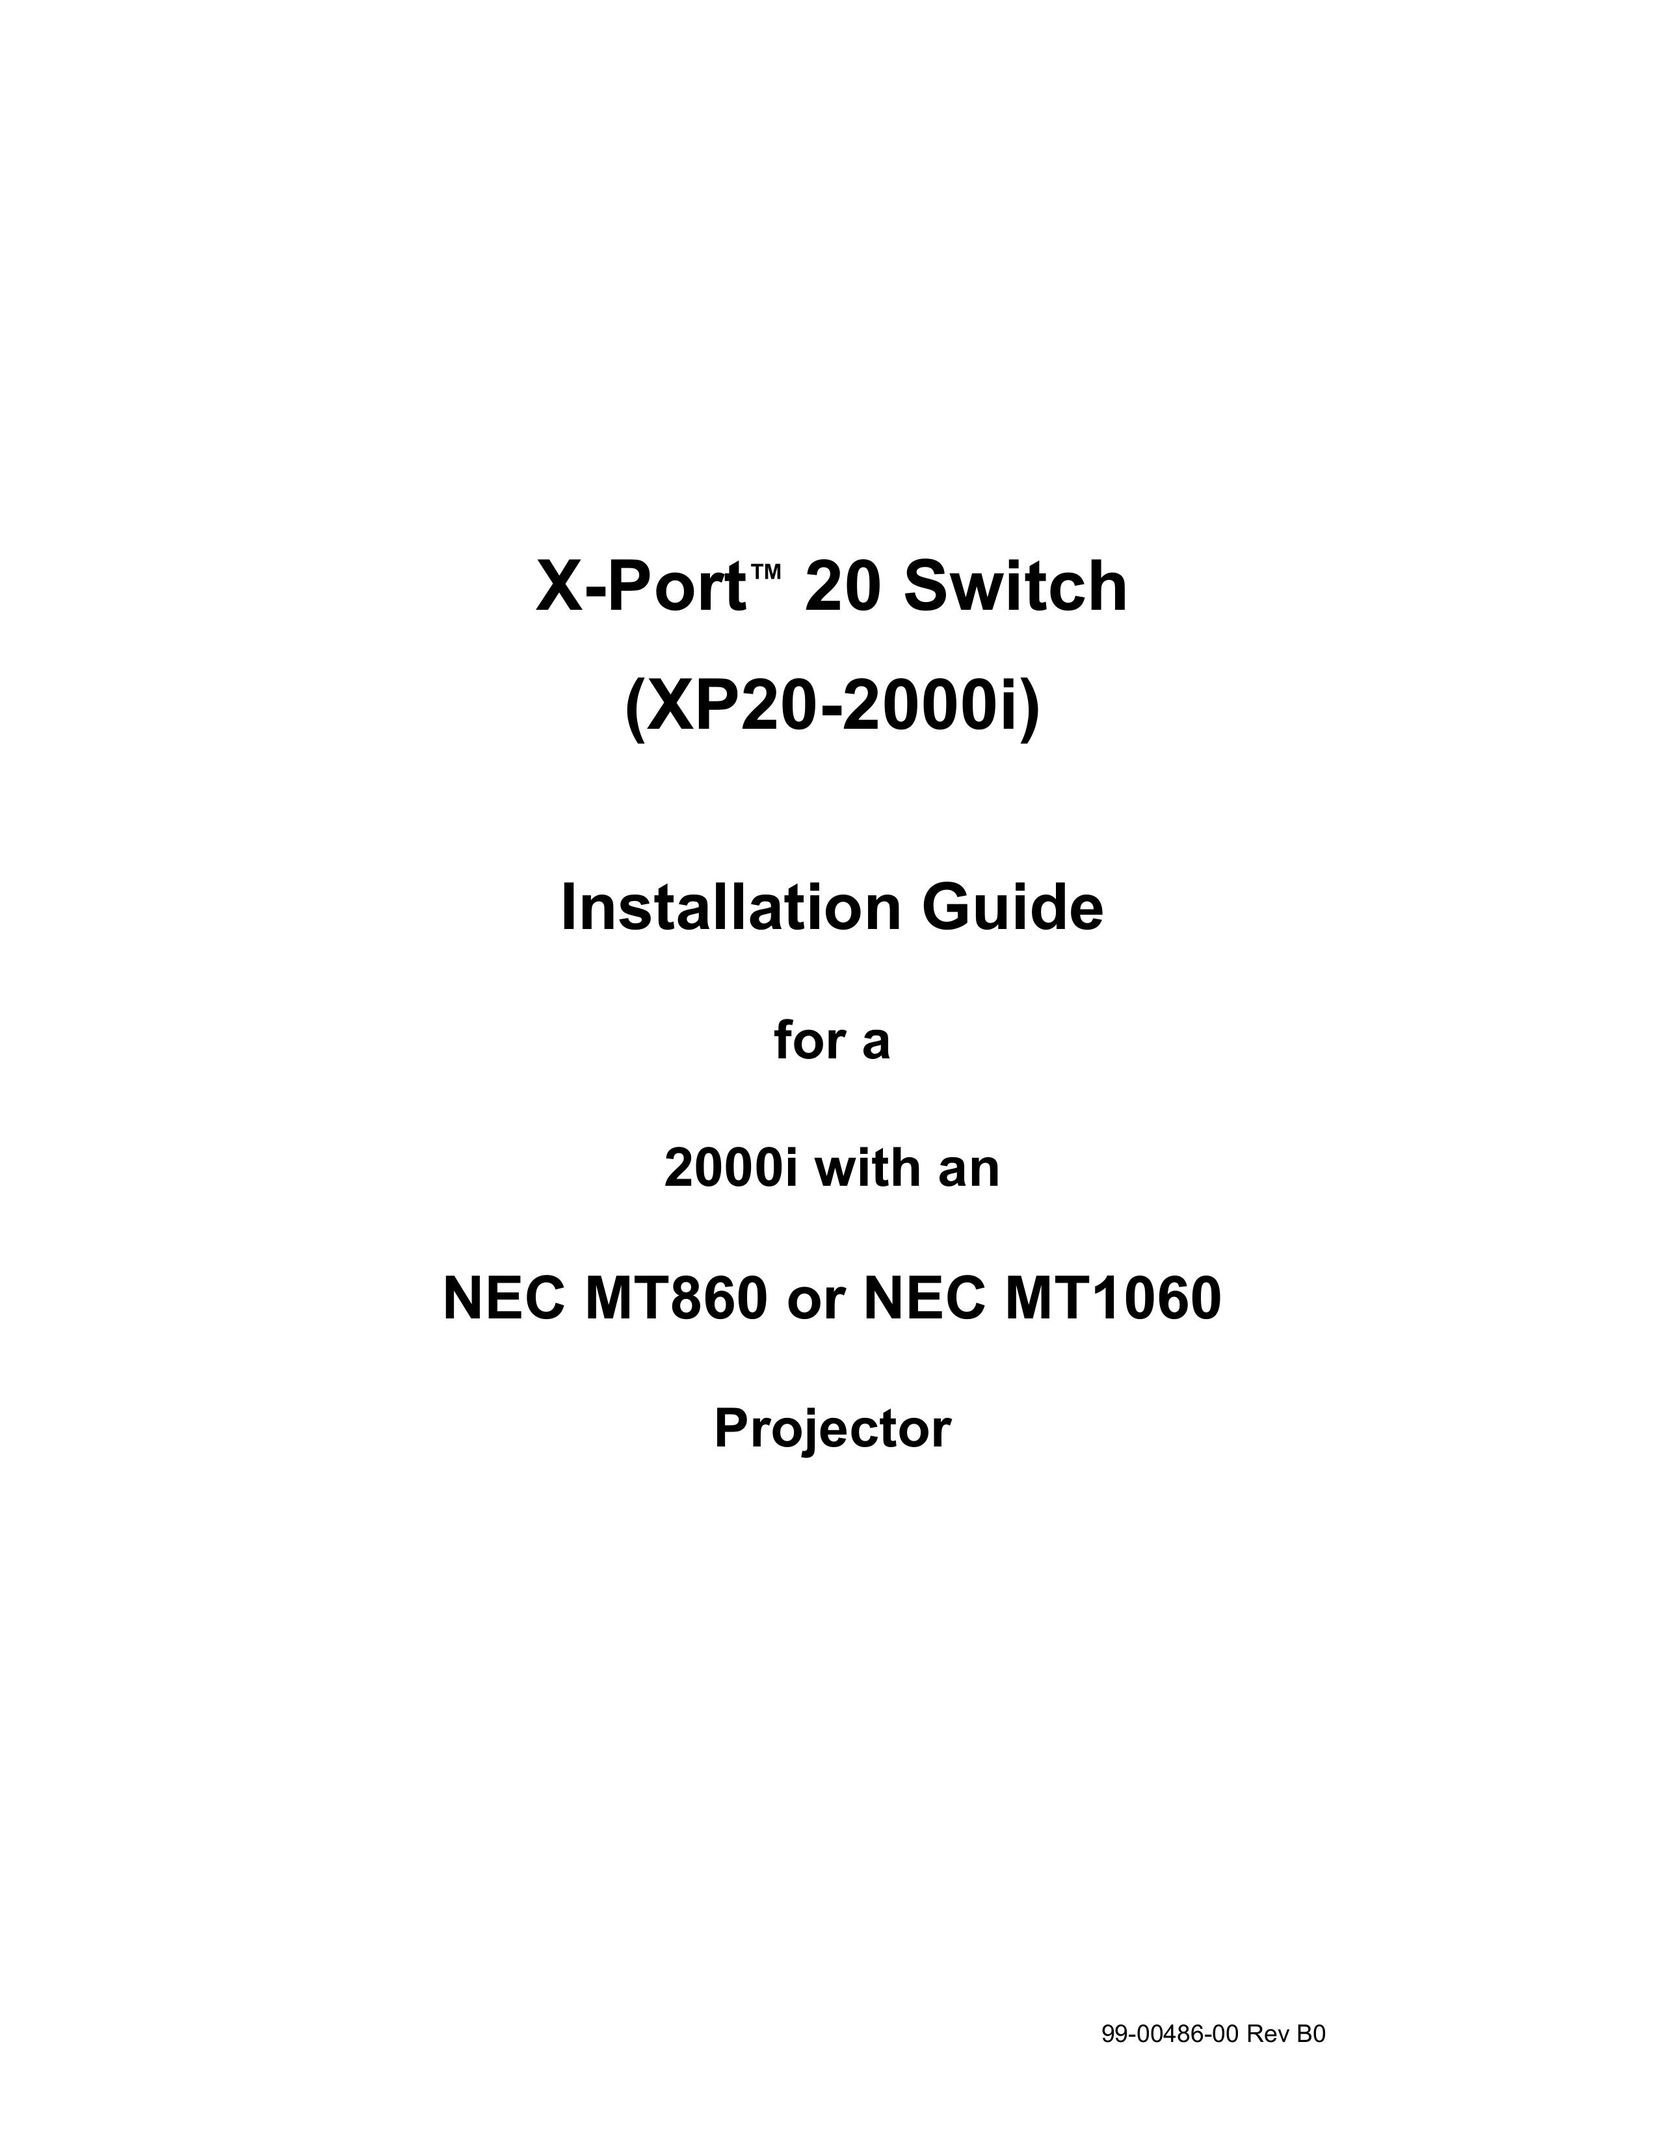 Smart Technologies XP20-2000i Projector User Manual